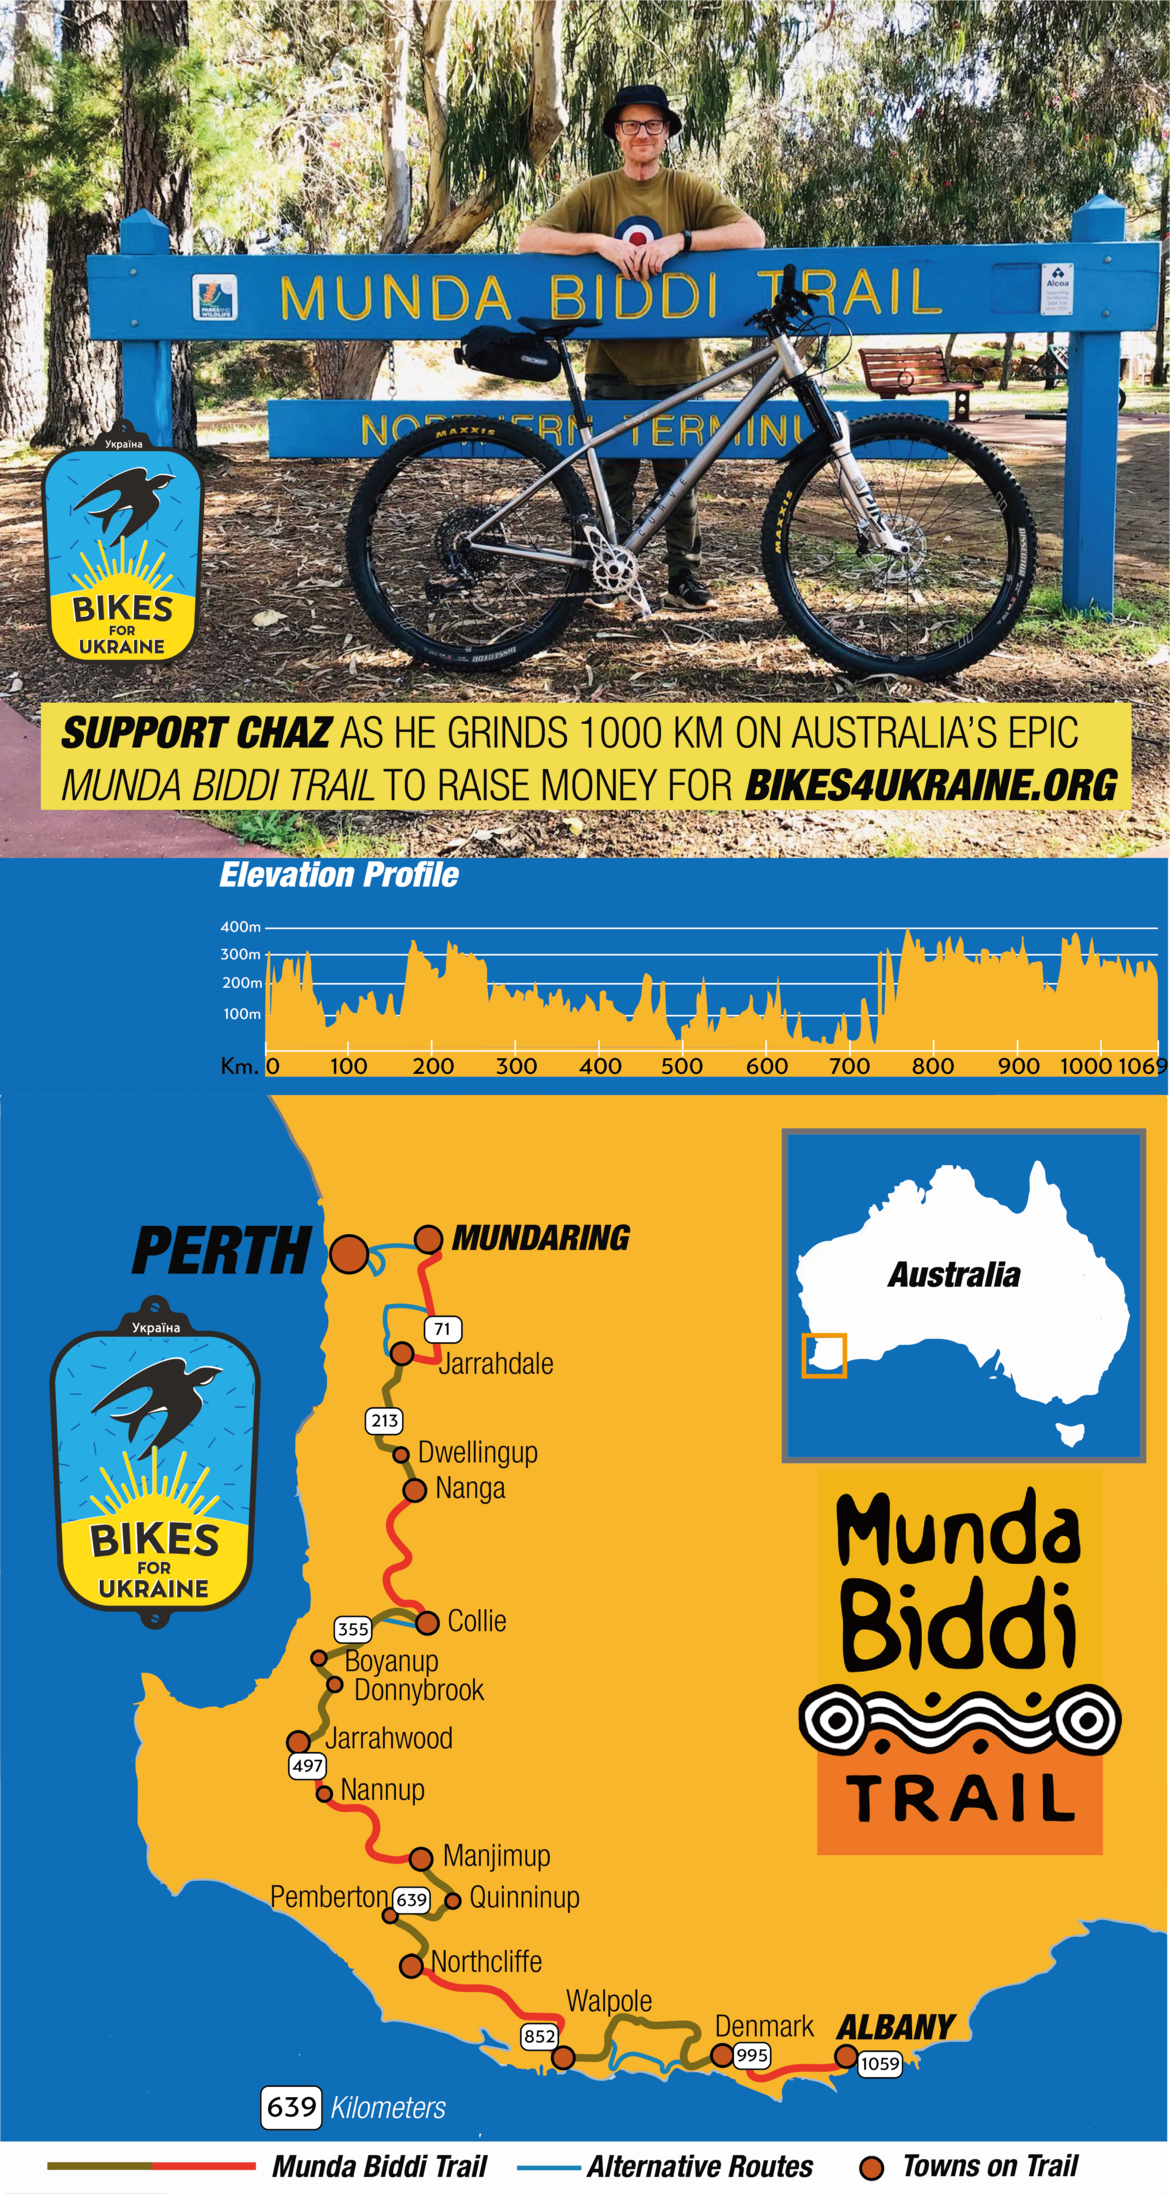 Chaz is riding 1069 km for Bikes4Ukraine